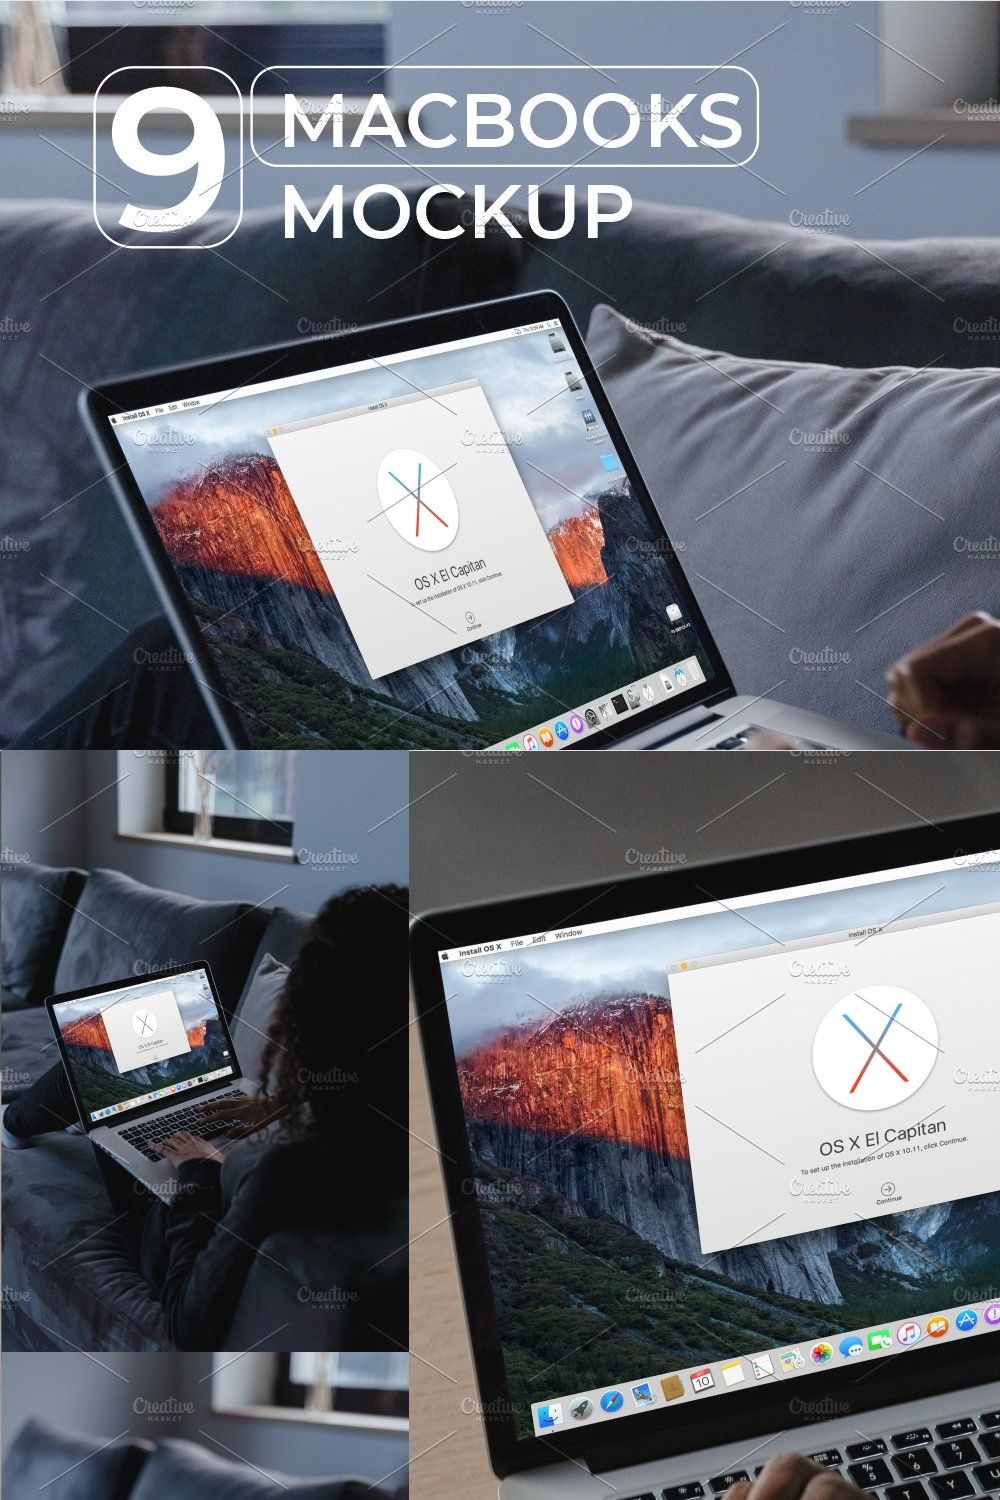 9 MacBooks/Laptops Mockup pinterest preview image.